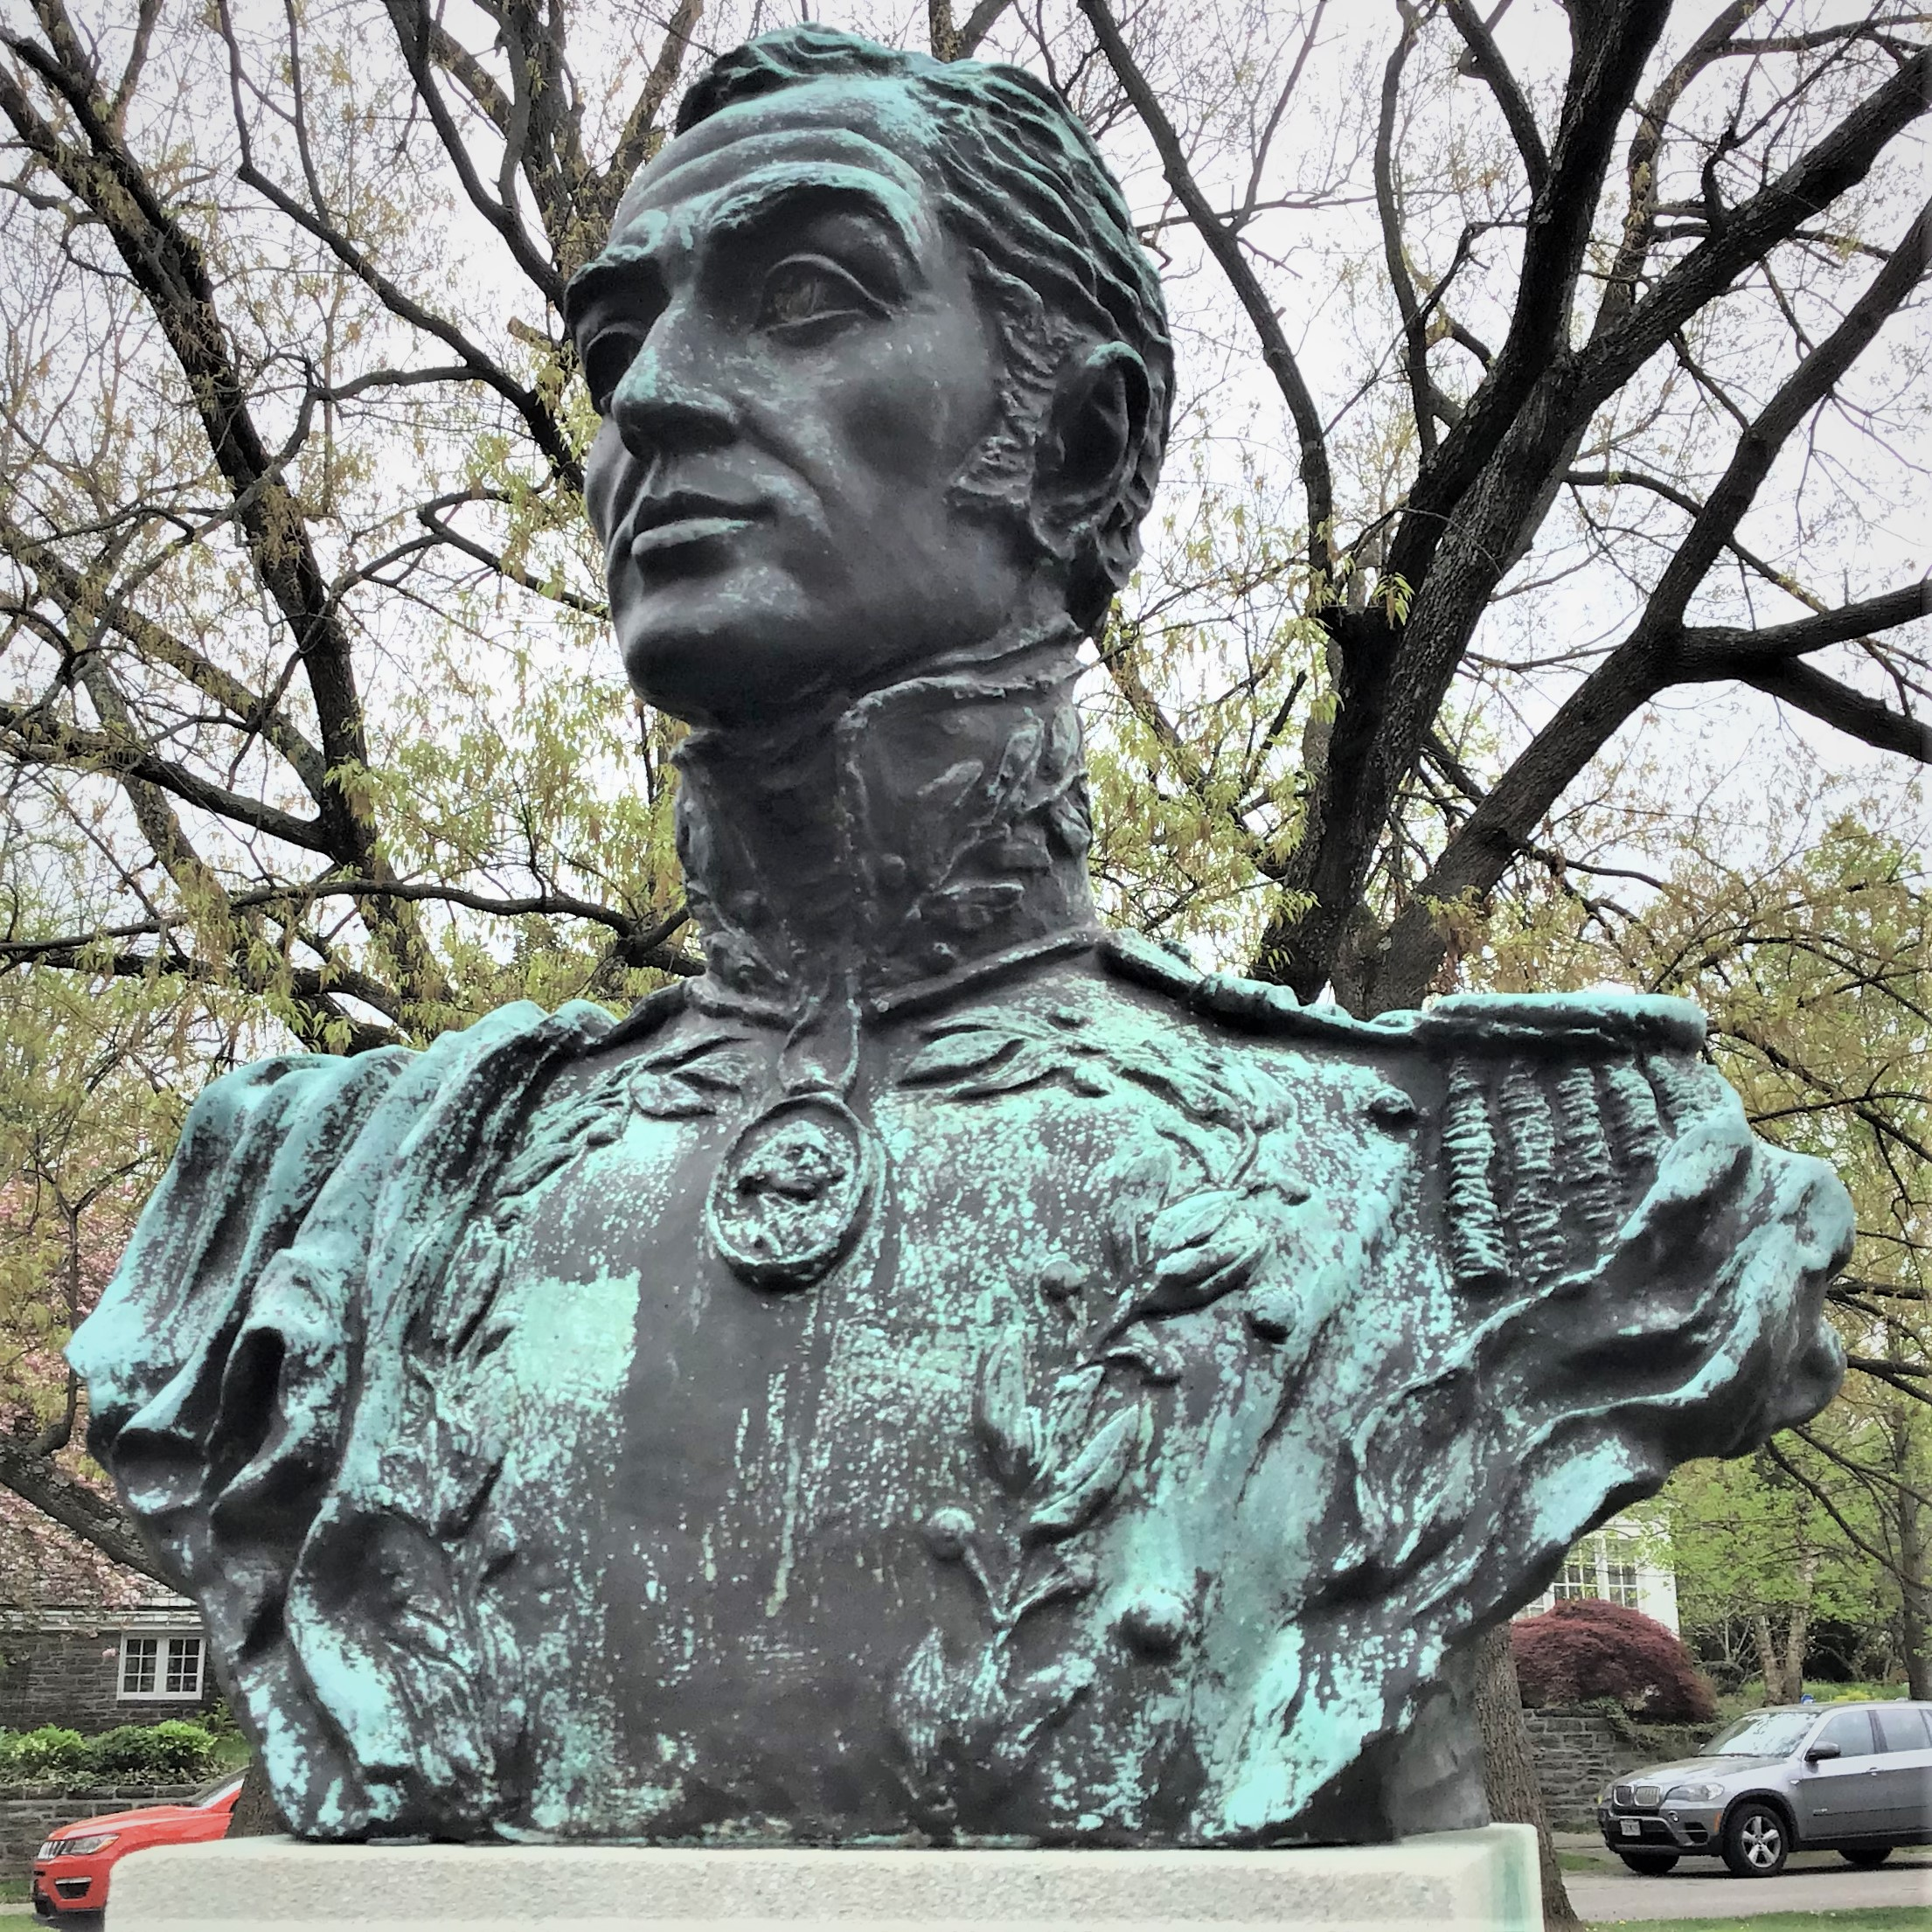 What’s With That Random Simon Bolivar Statue?